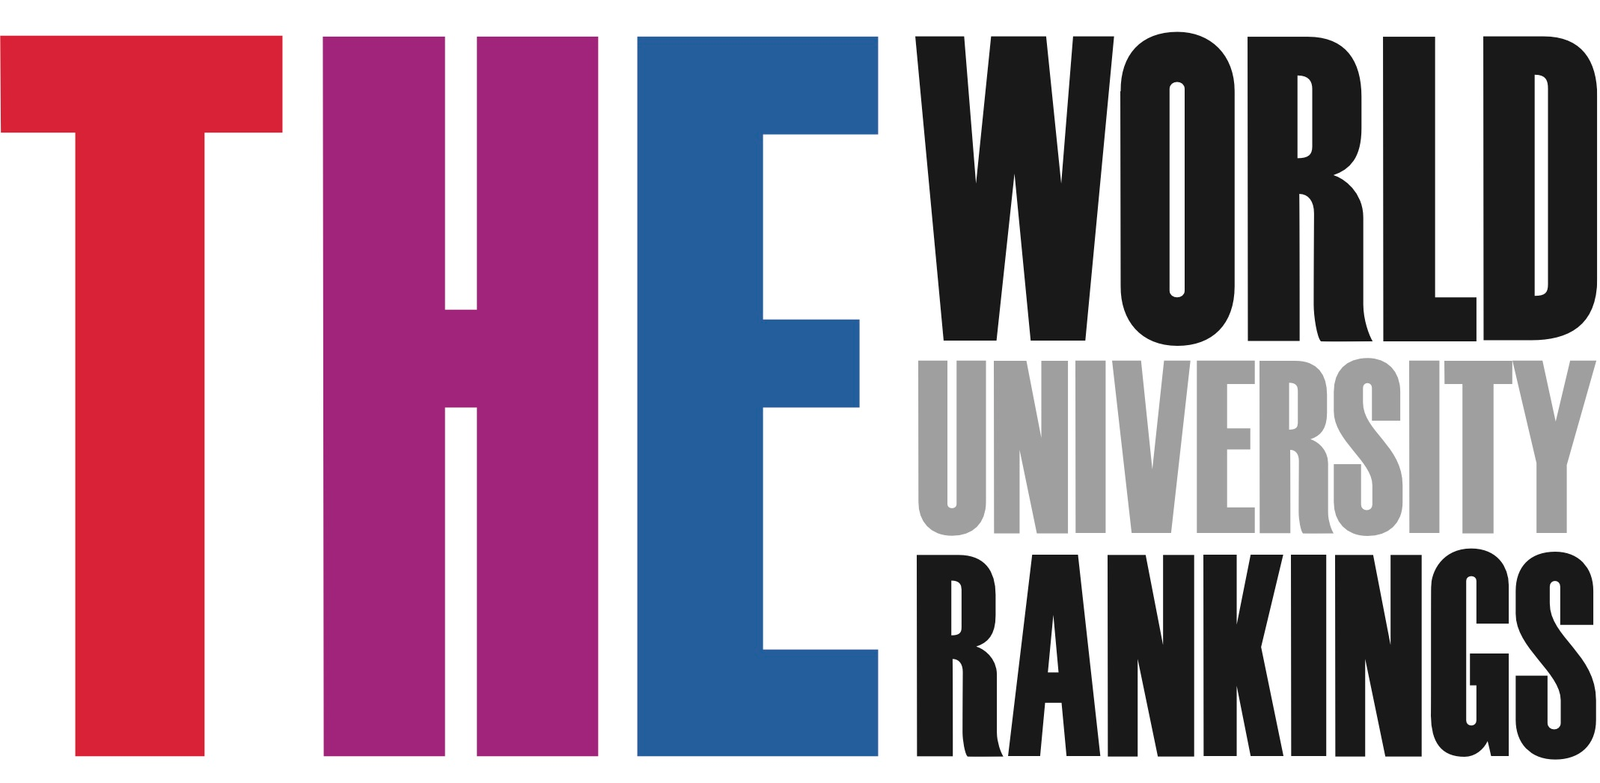 Times higher Education. Журнал times higher Education. World University rankings. Times higher Education логотип.